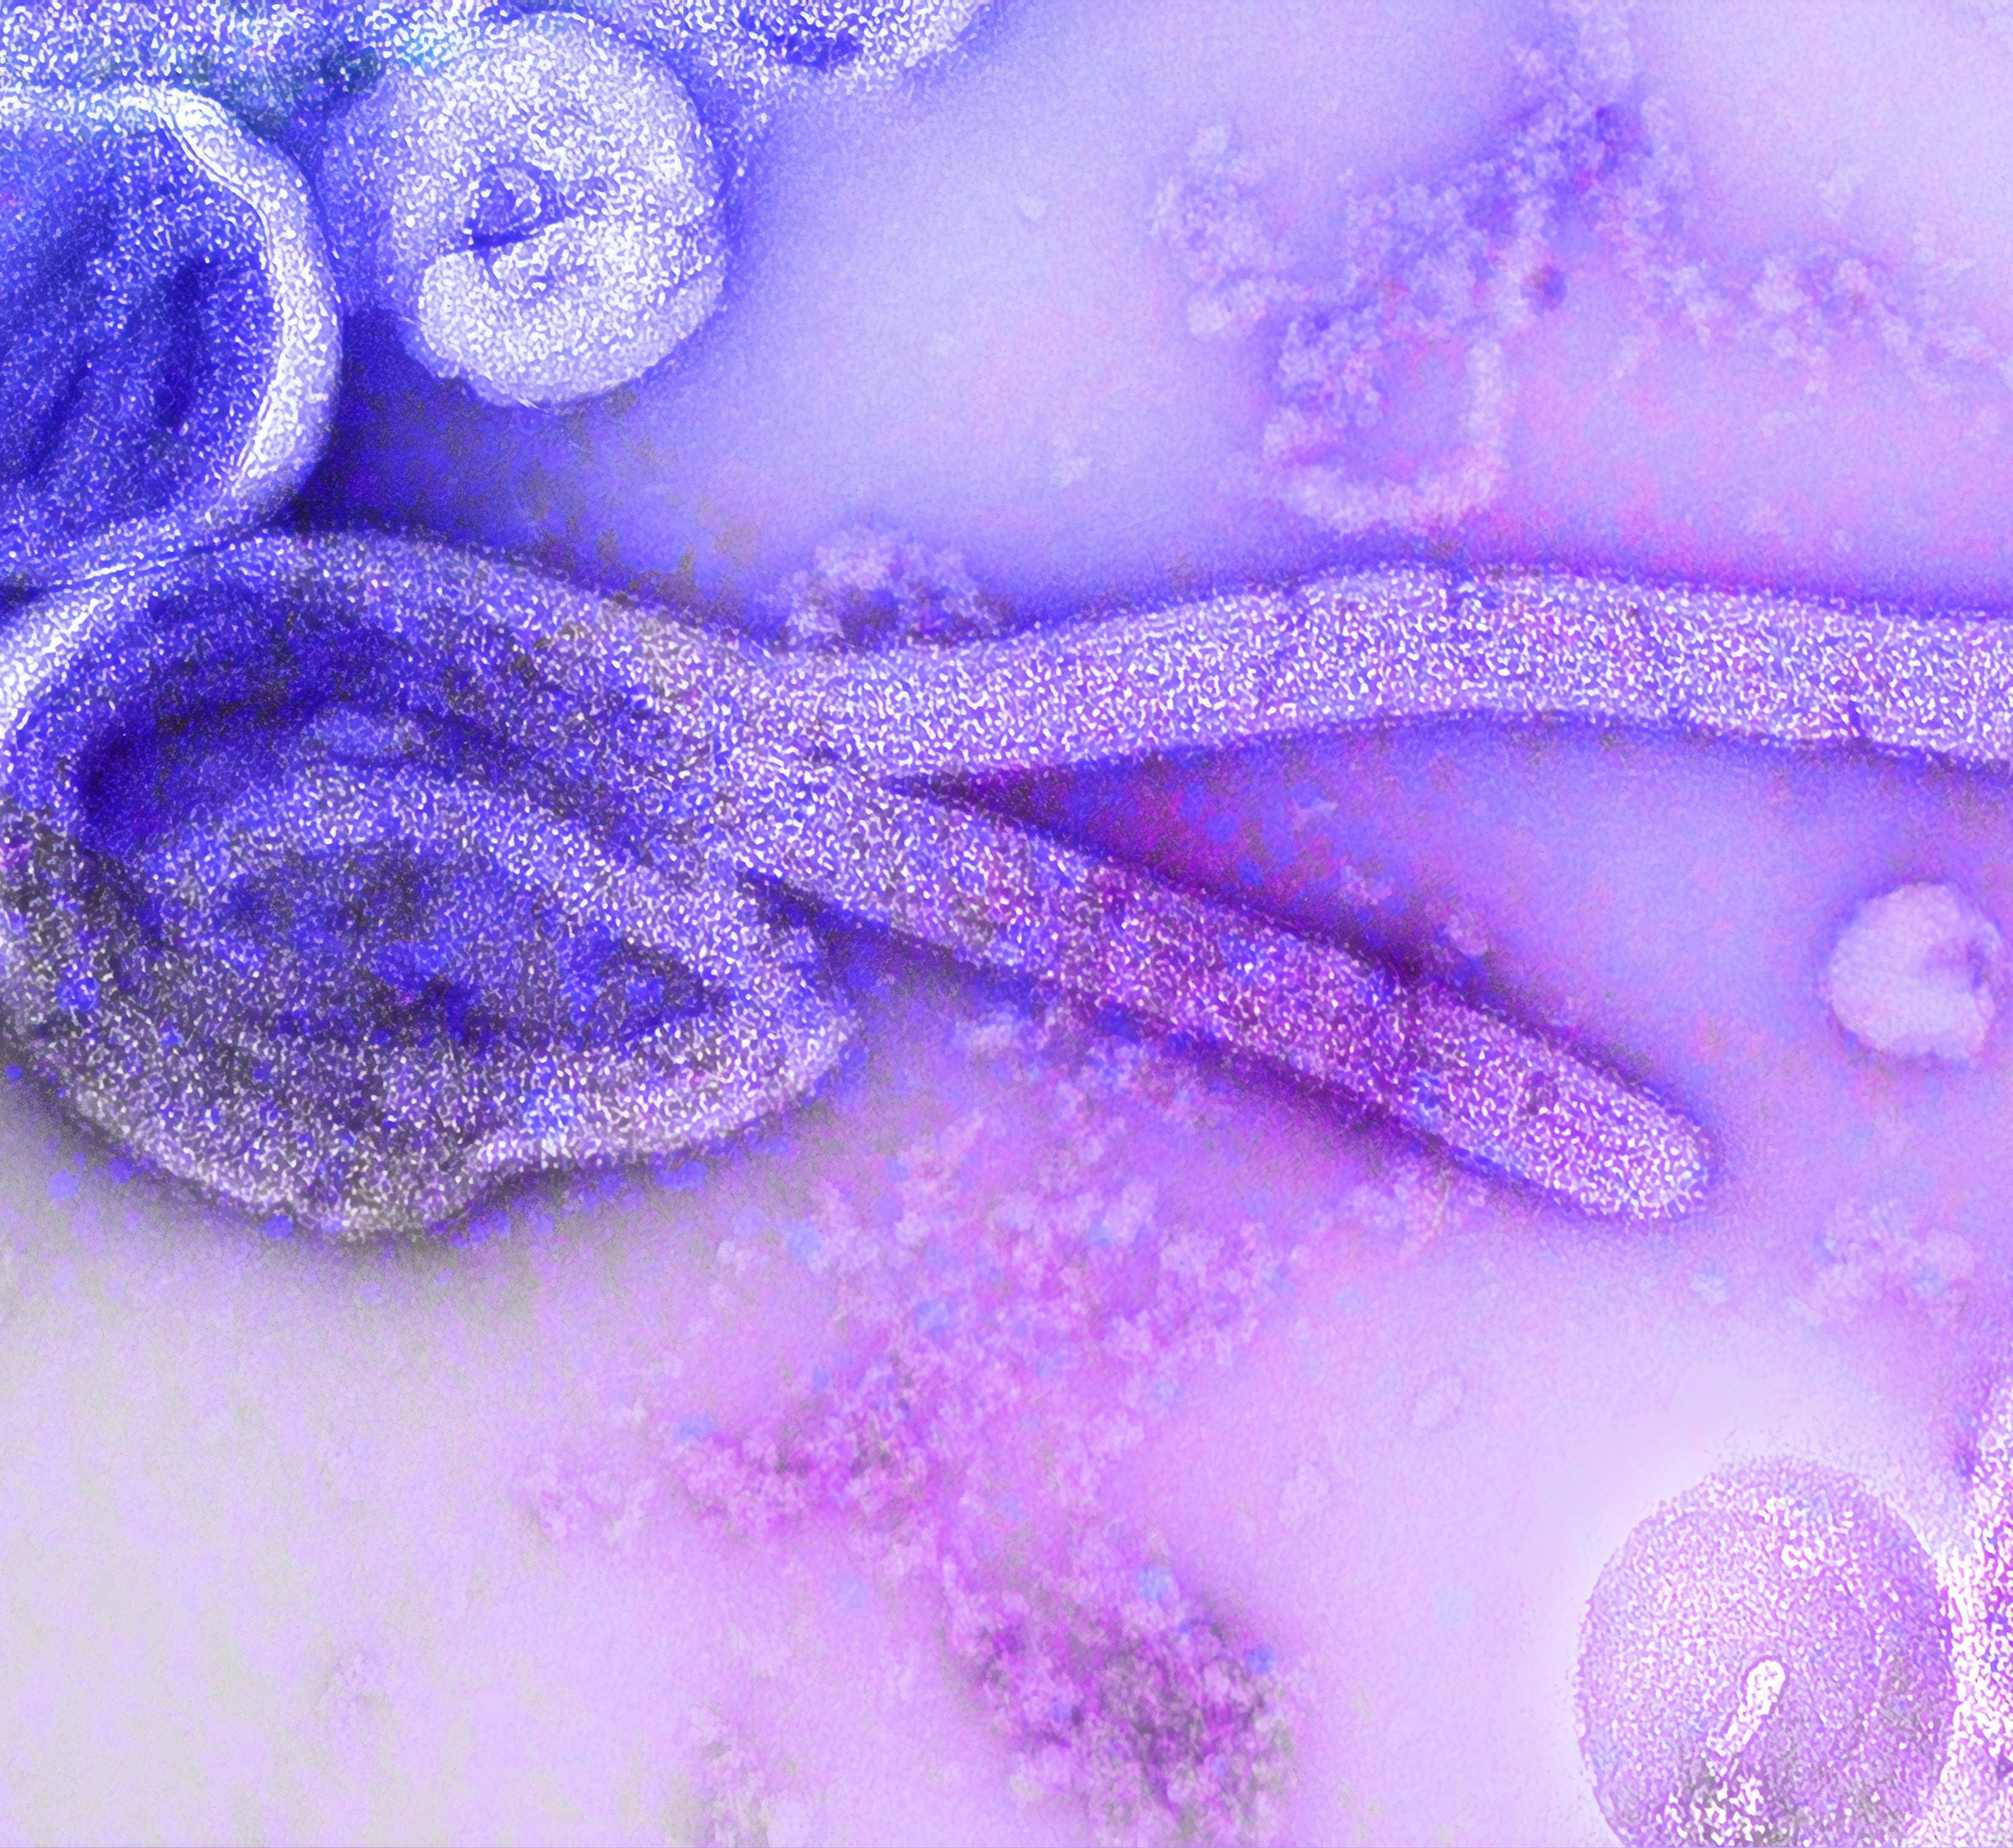 Ebola Virus Cases Reach 23 in Guinea, Africa Through Early 2021